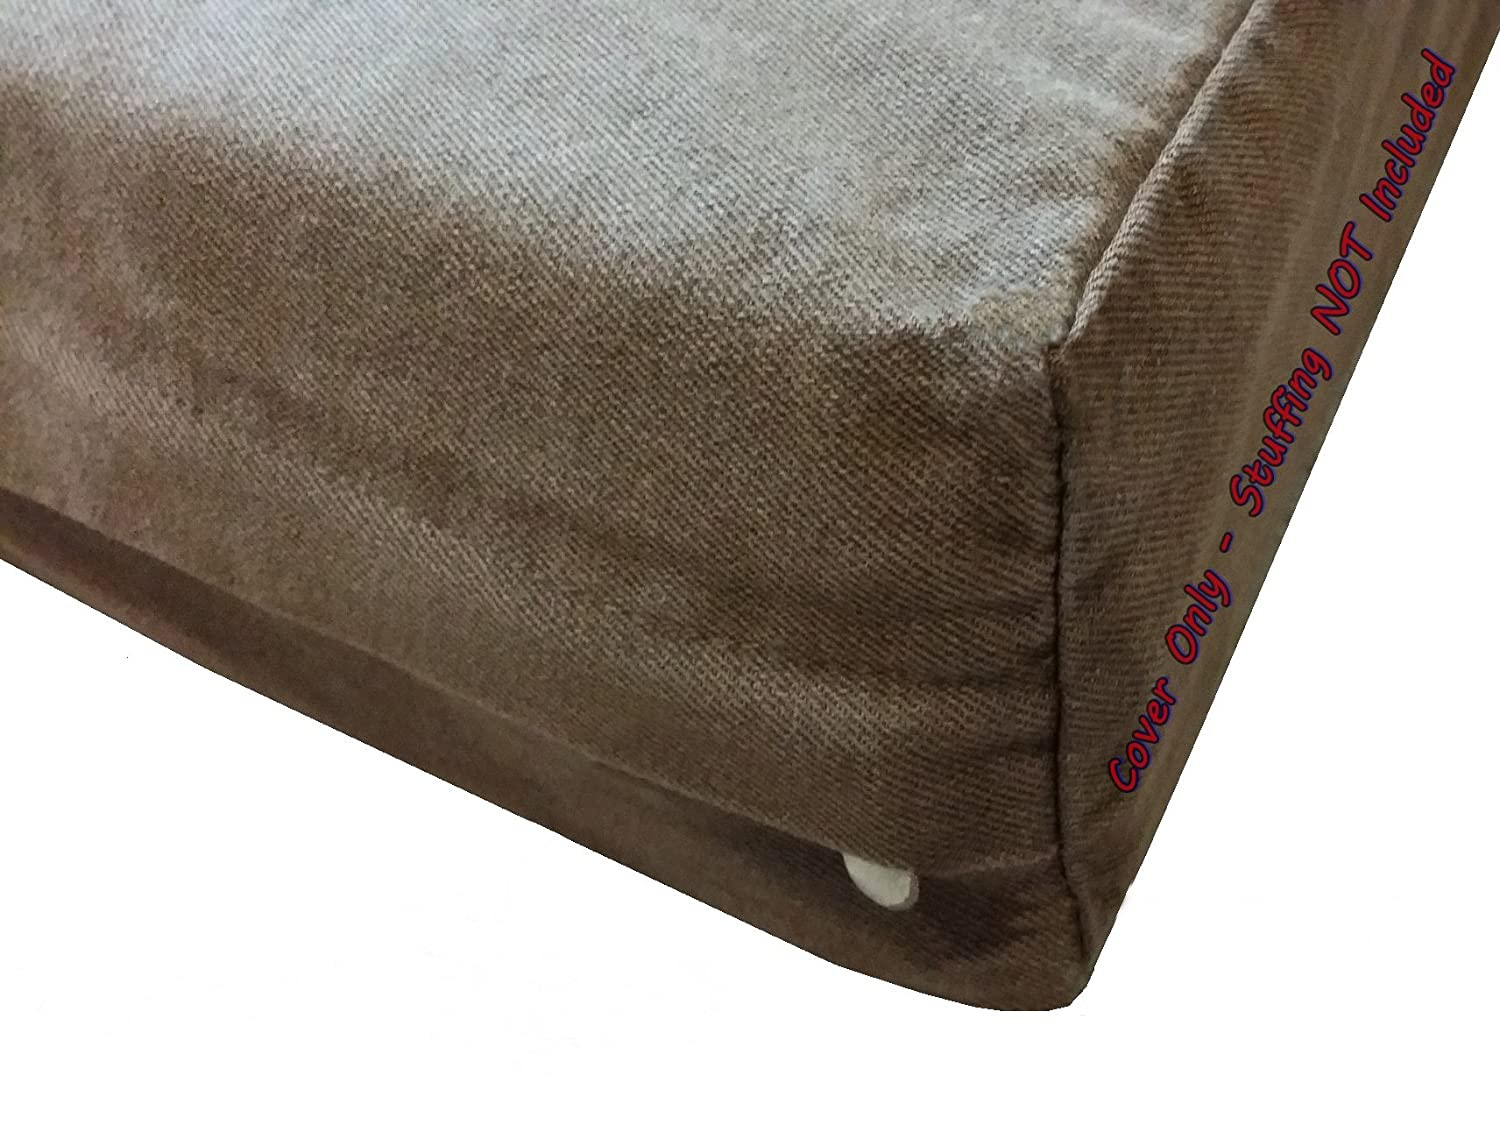 DIY Dog Bed Cover
 Dogbed4less DIY Durable Brown Denim Pet Bed External Duvet